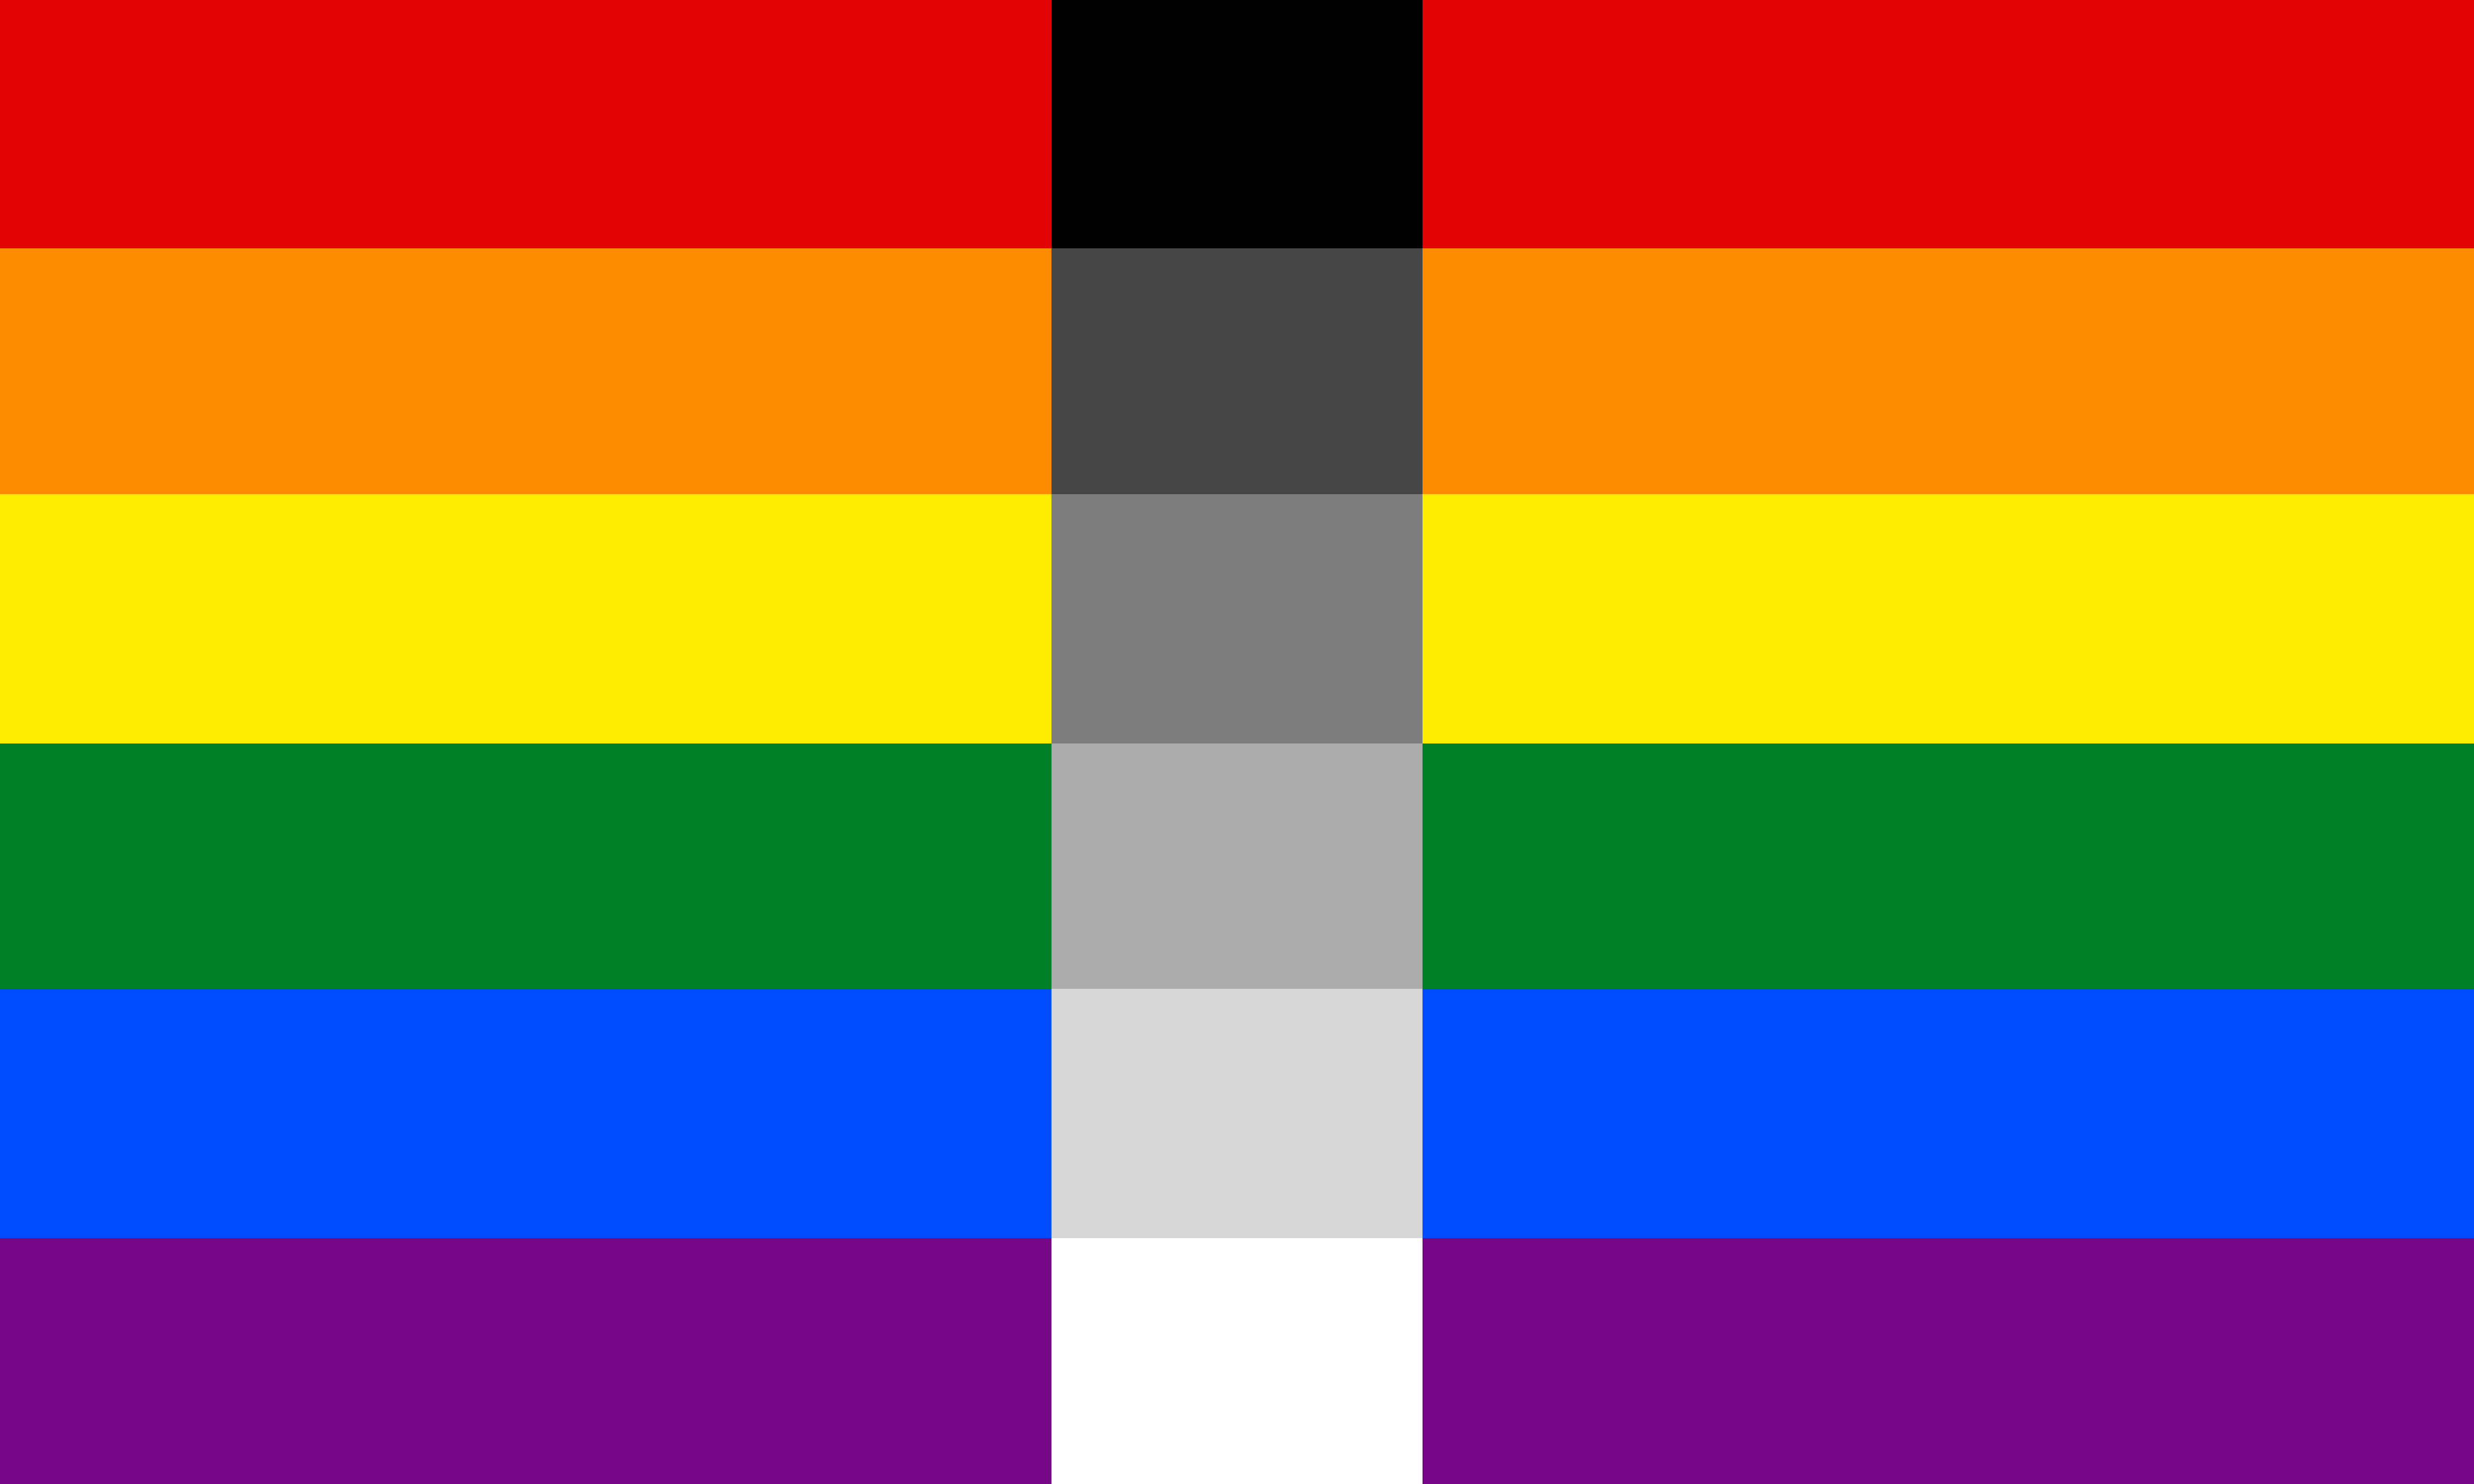 homoflexible 1 by_pride_flags-d8zu7qb.png.